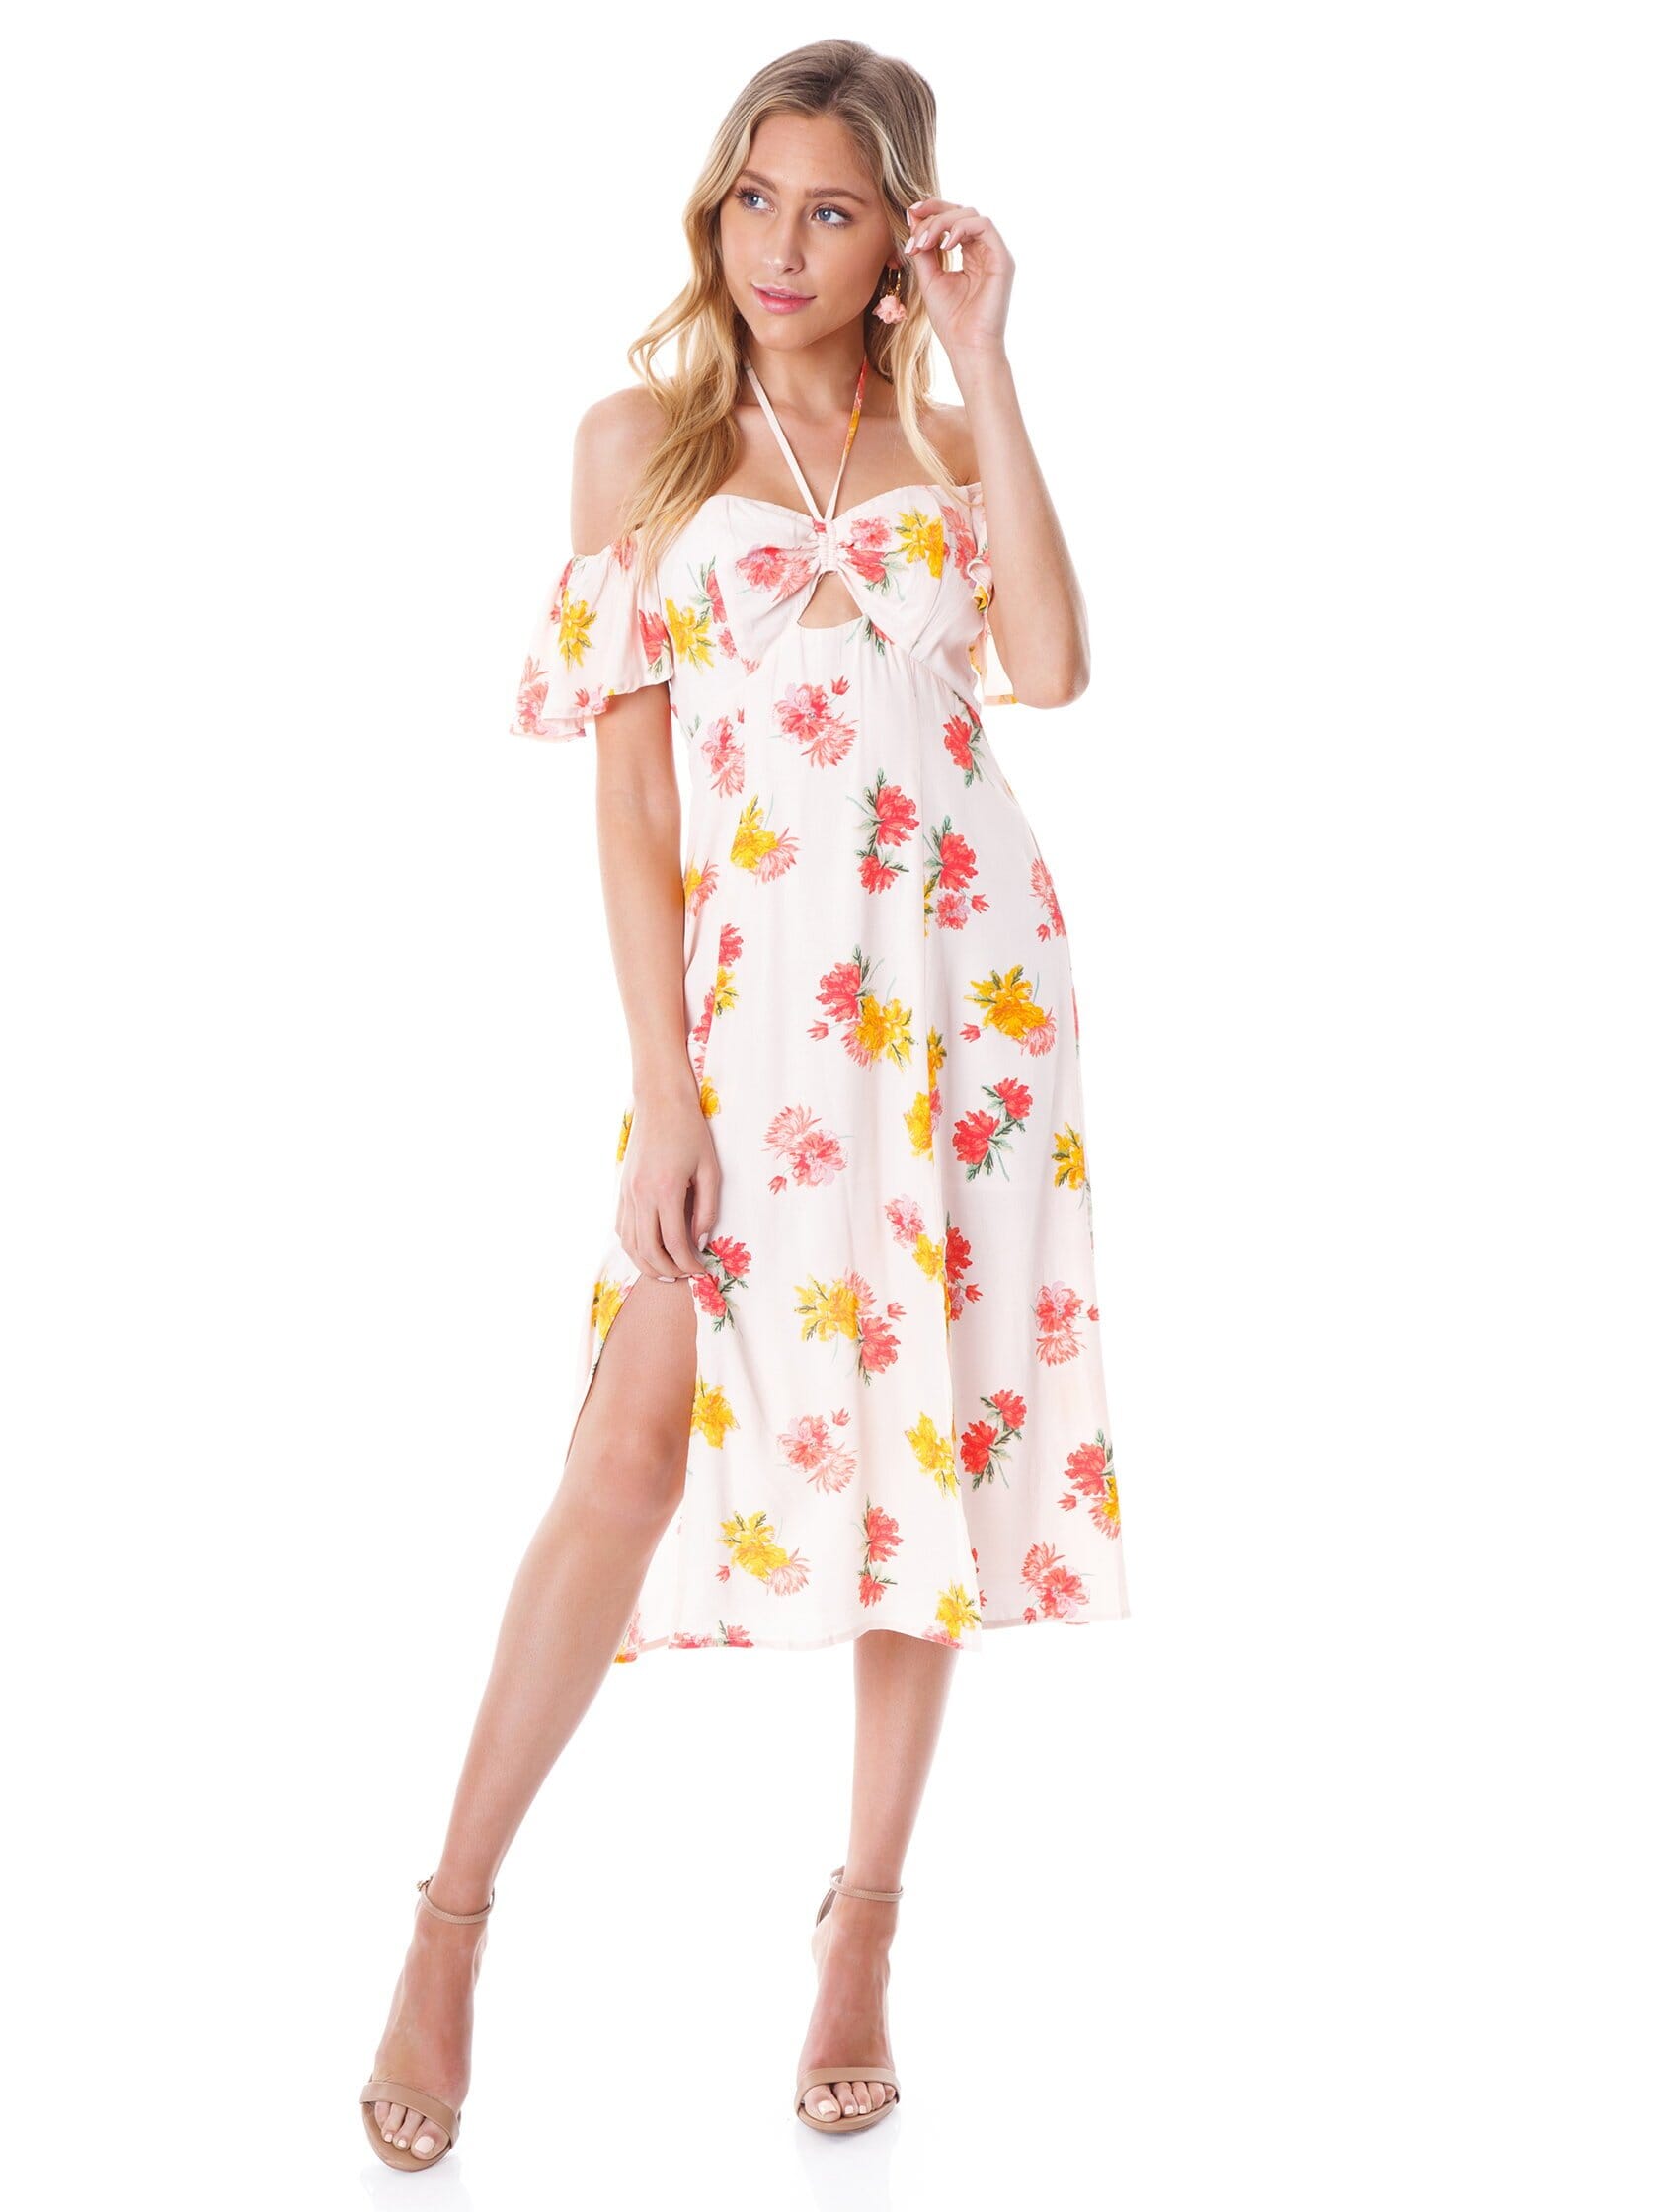 ASTR Kayli Dress in Blush/Multi Floral